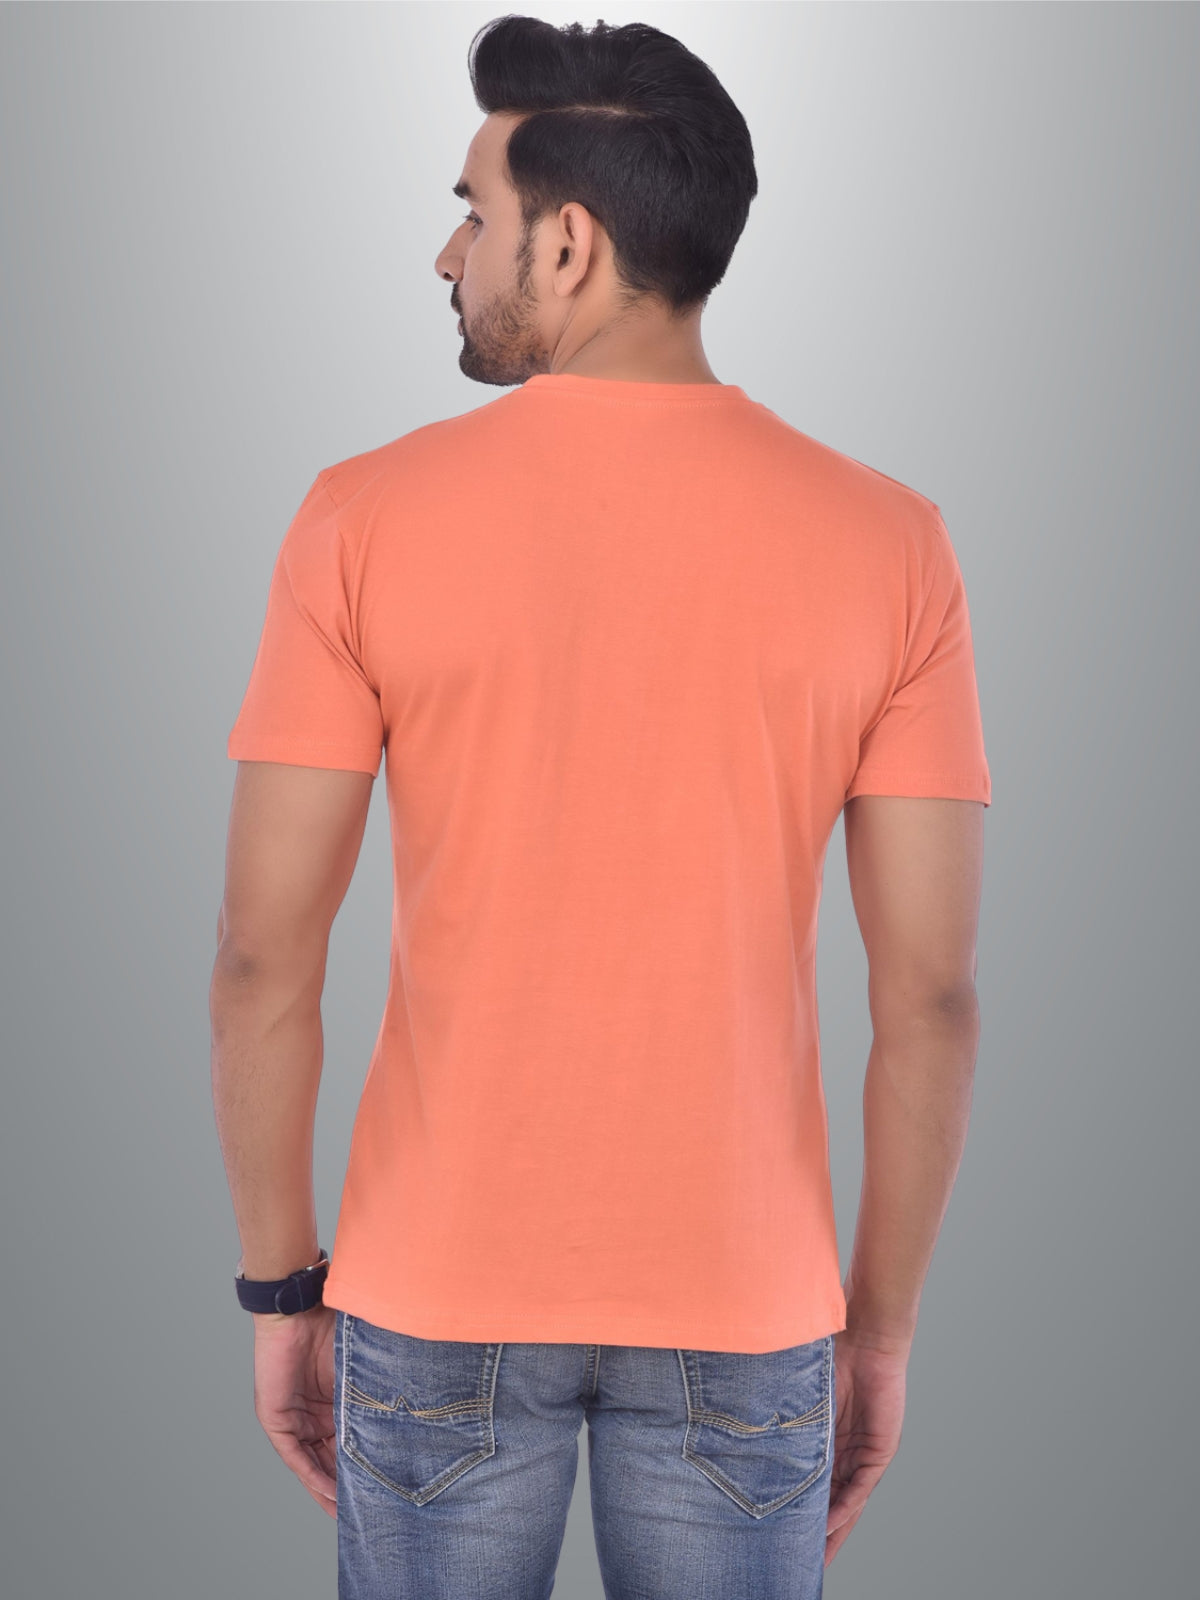 Mens Solid Round Neck  Half Sleeve Cotton Blend Peach T-shirt